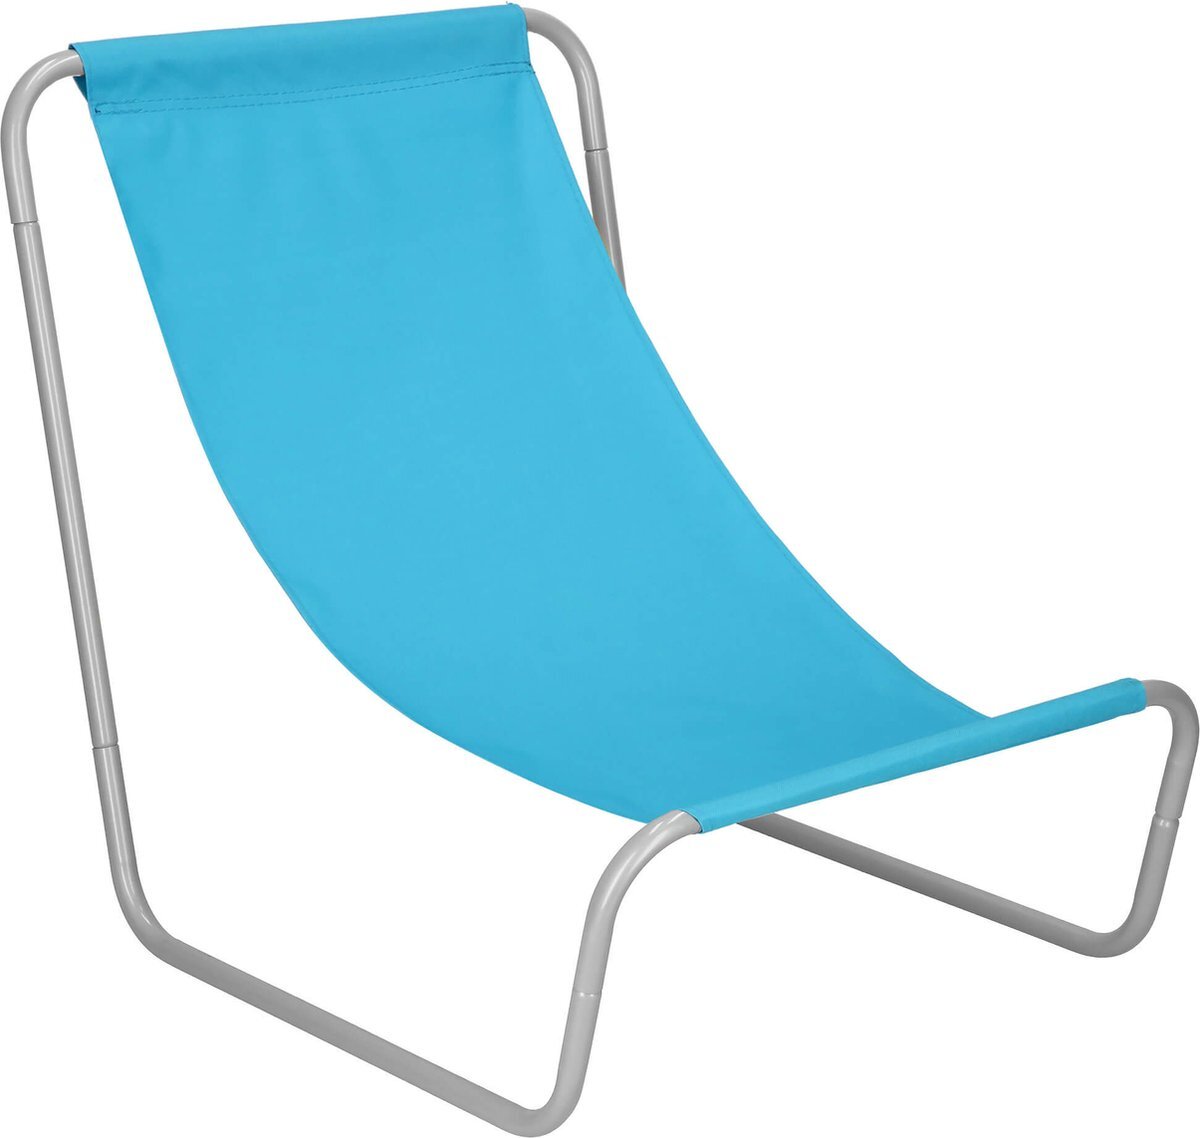 springos Ligstoel | Strandstoel | Ligbed | Inclusief Draagtas | Lichtblauw